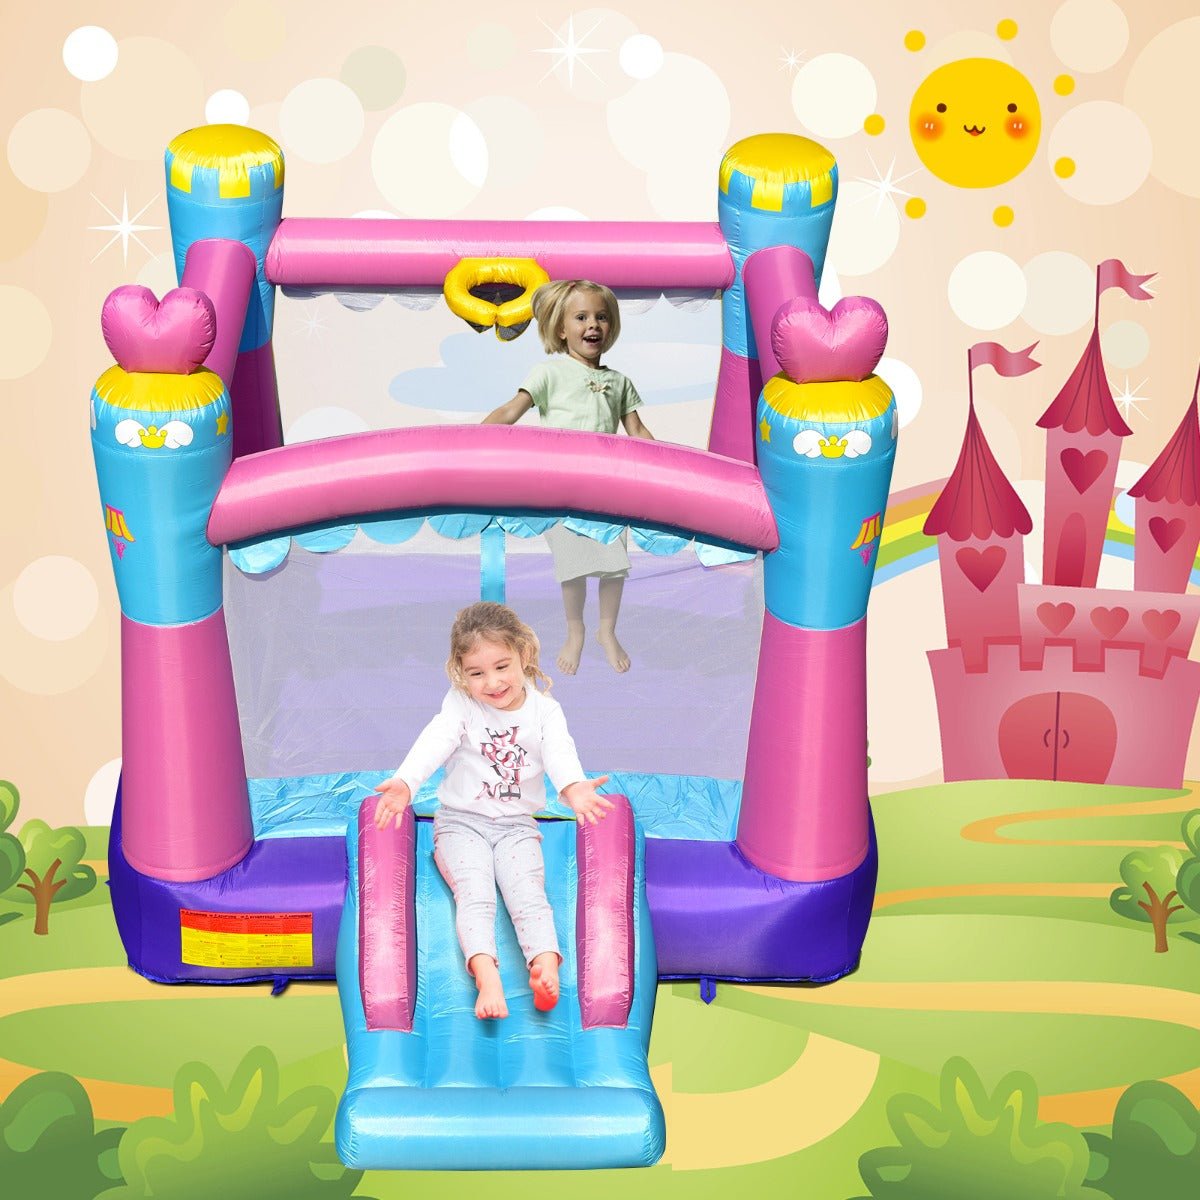 Jump Into Joy: Princess Theme Inflatable Castle with Basketball Hoop